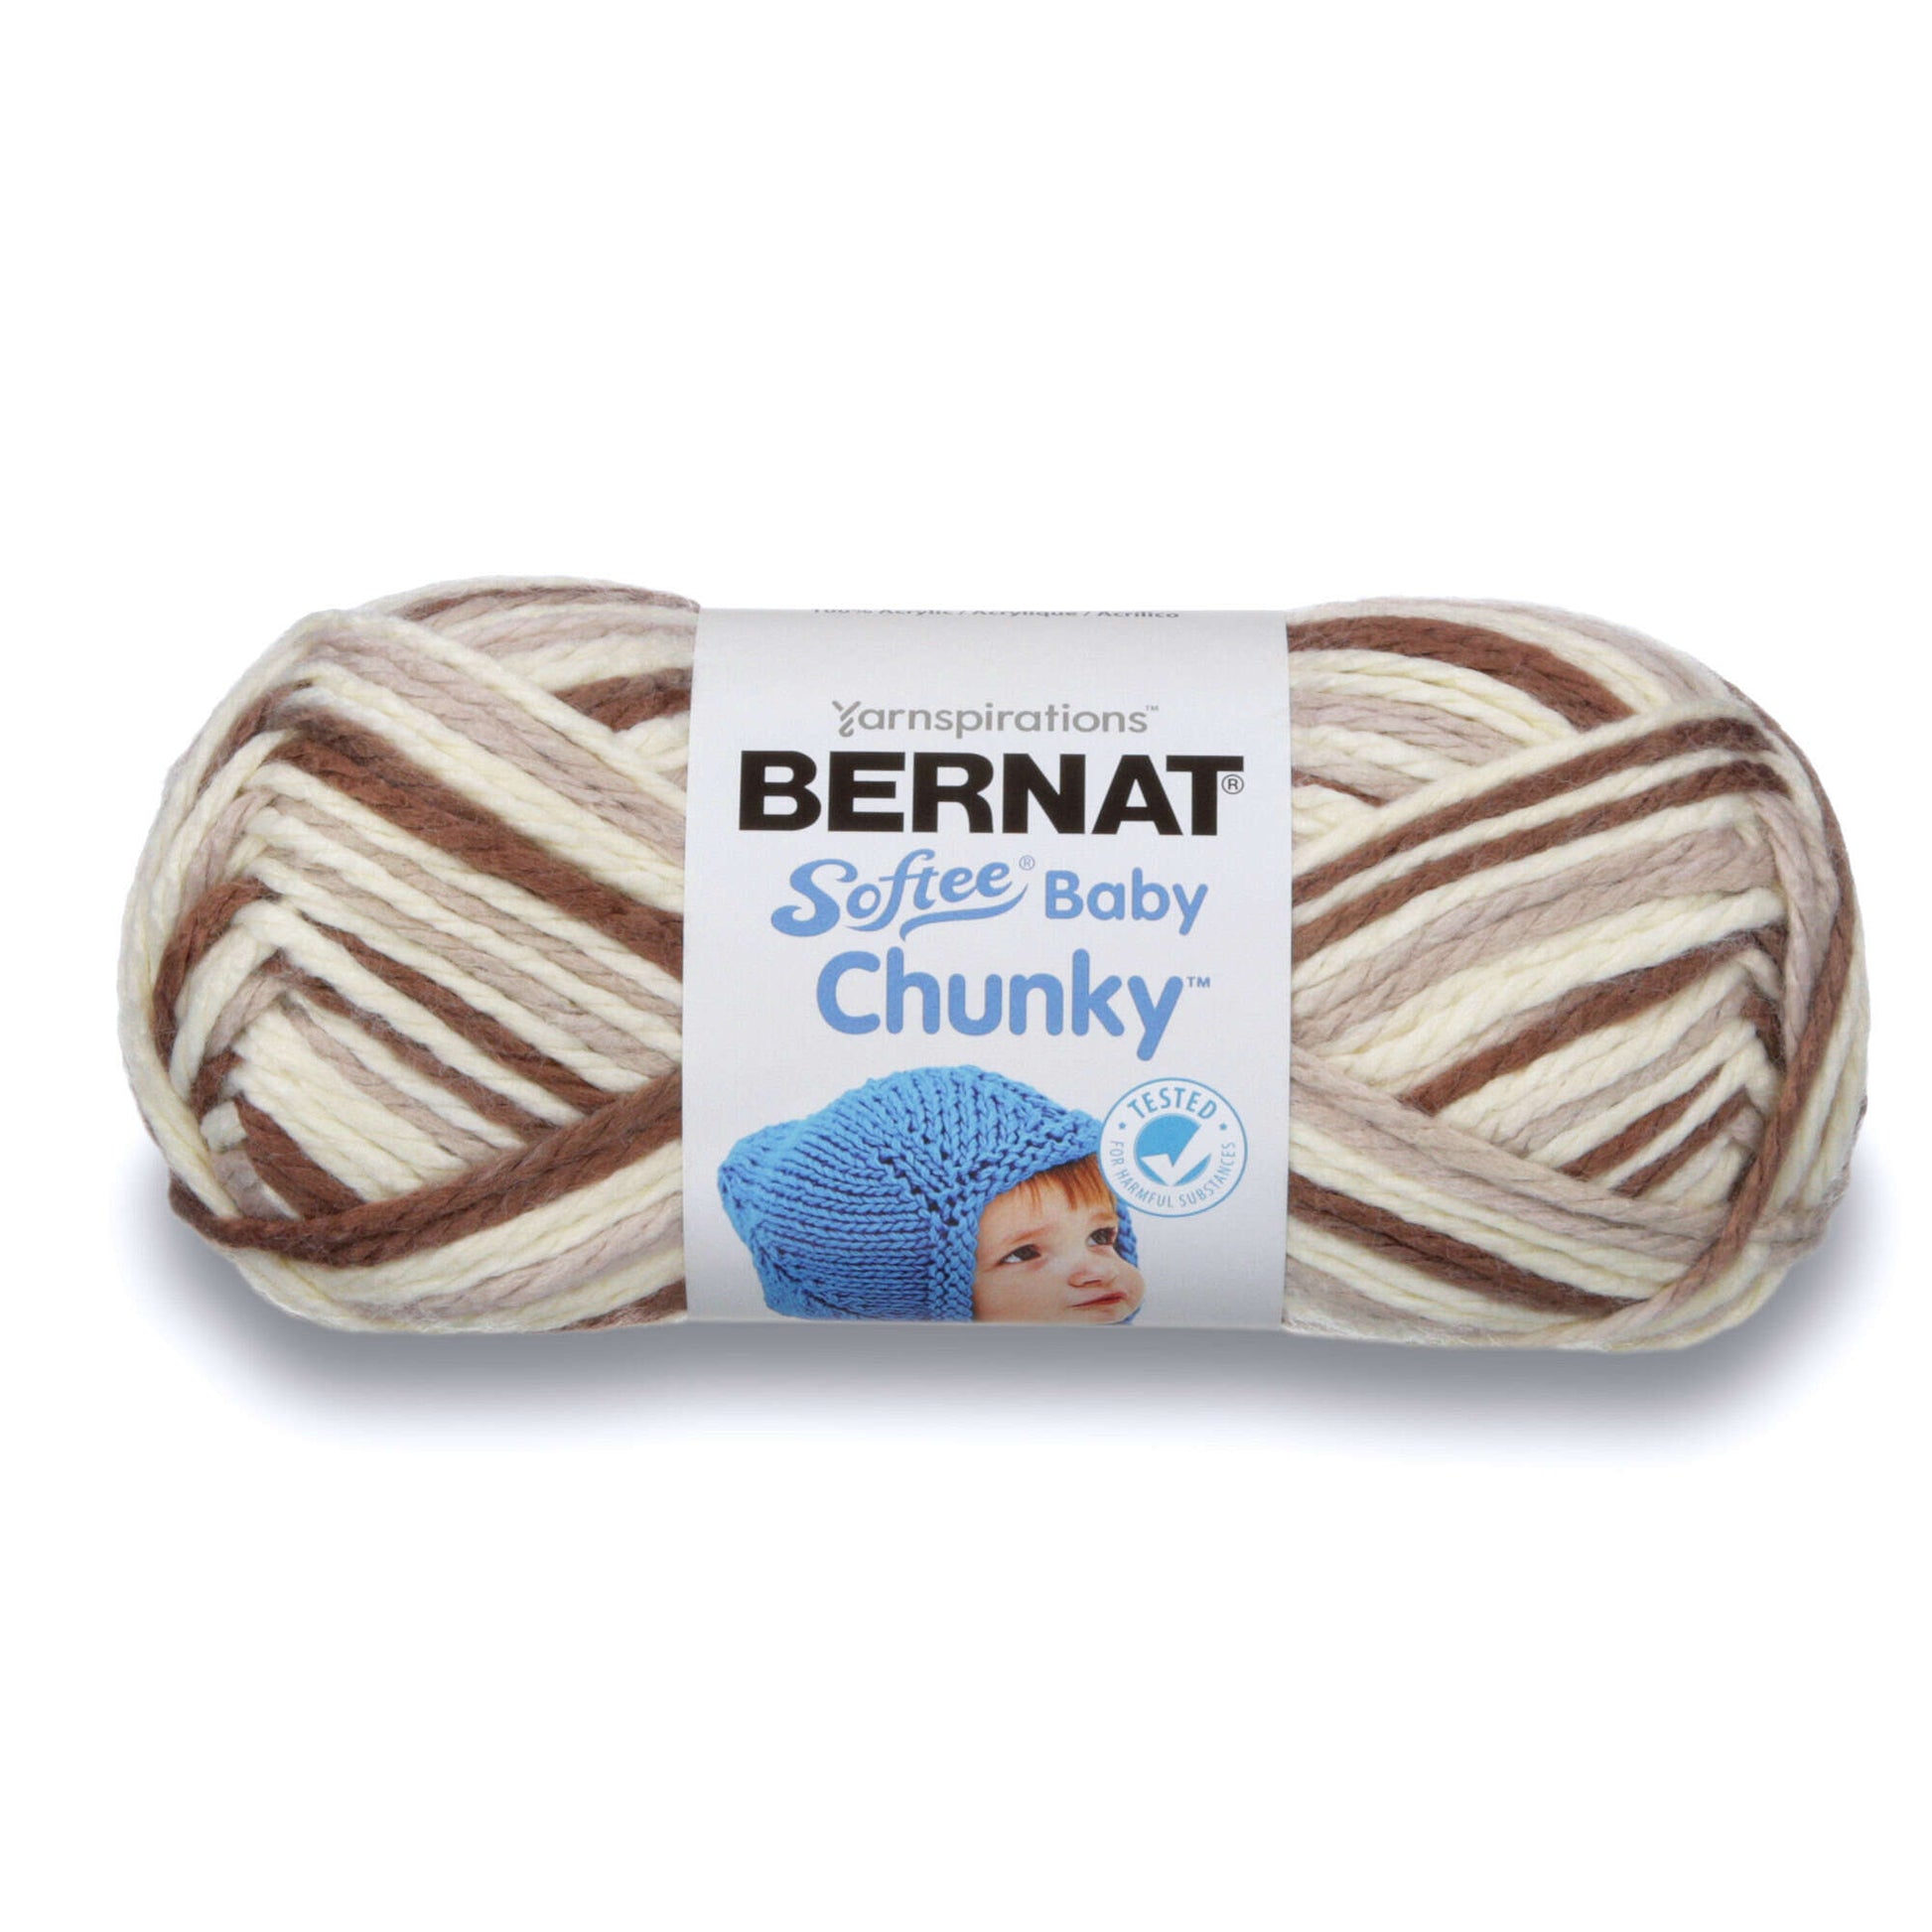 Bernat Softee Baby Chunky Ombres Yarn - Discontinued Shades